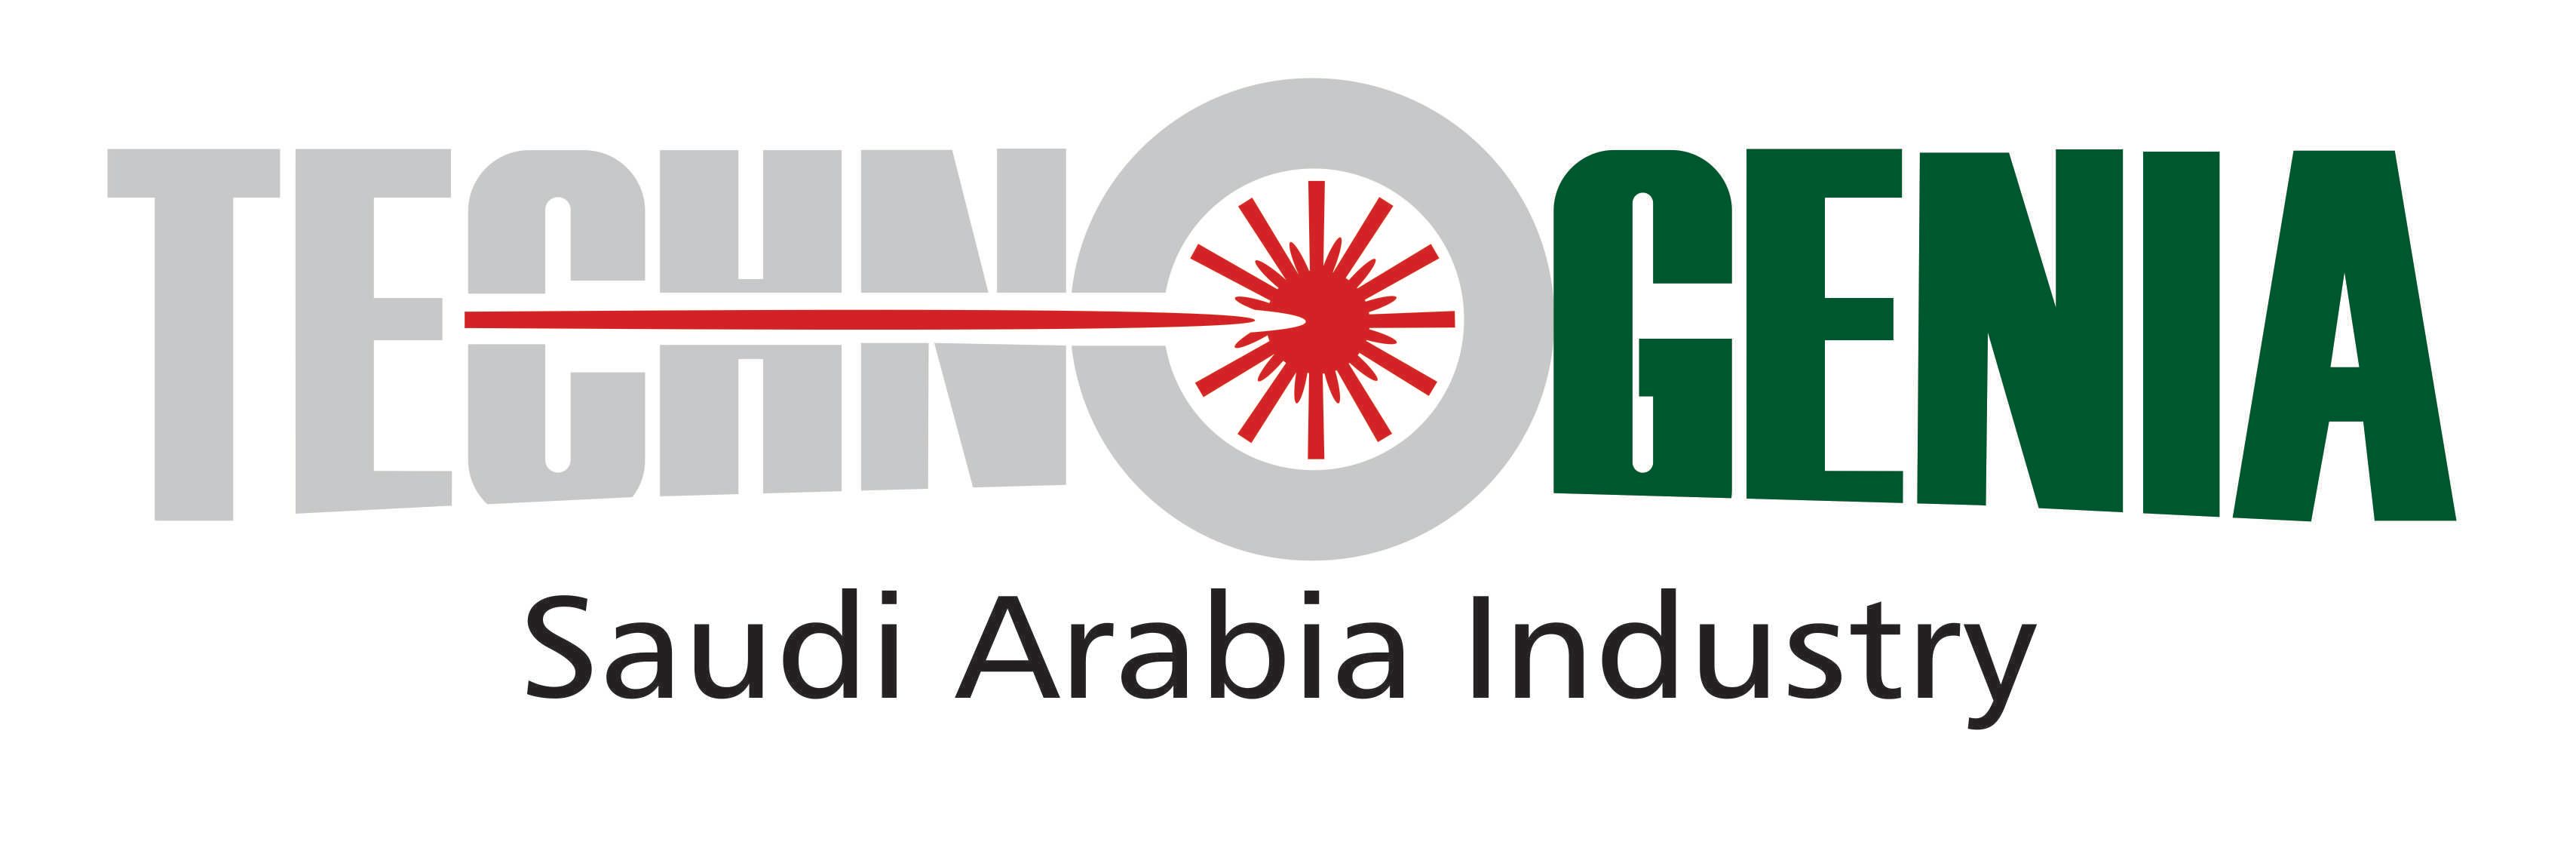 Technogenia Saudi Arabia Industry